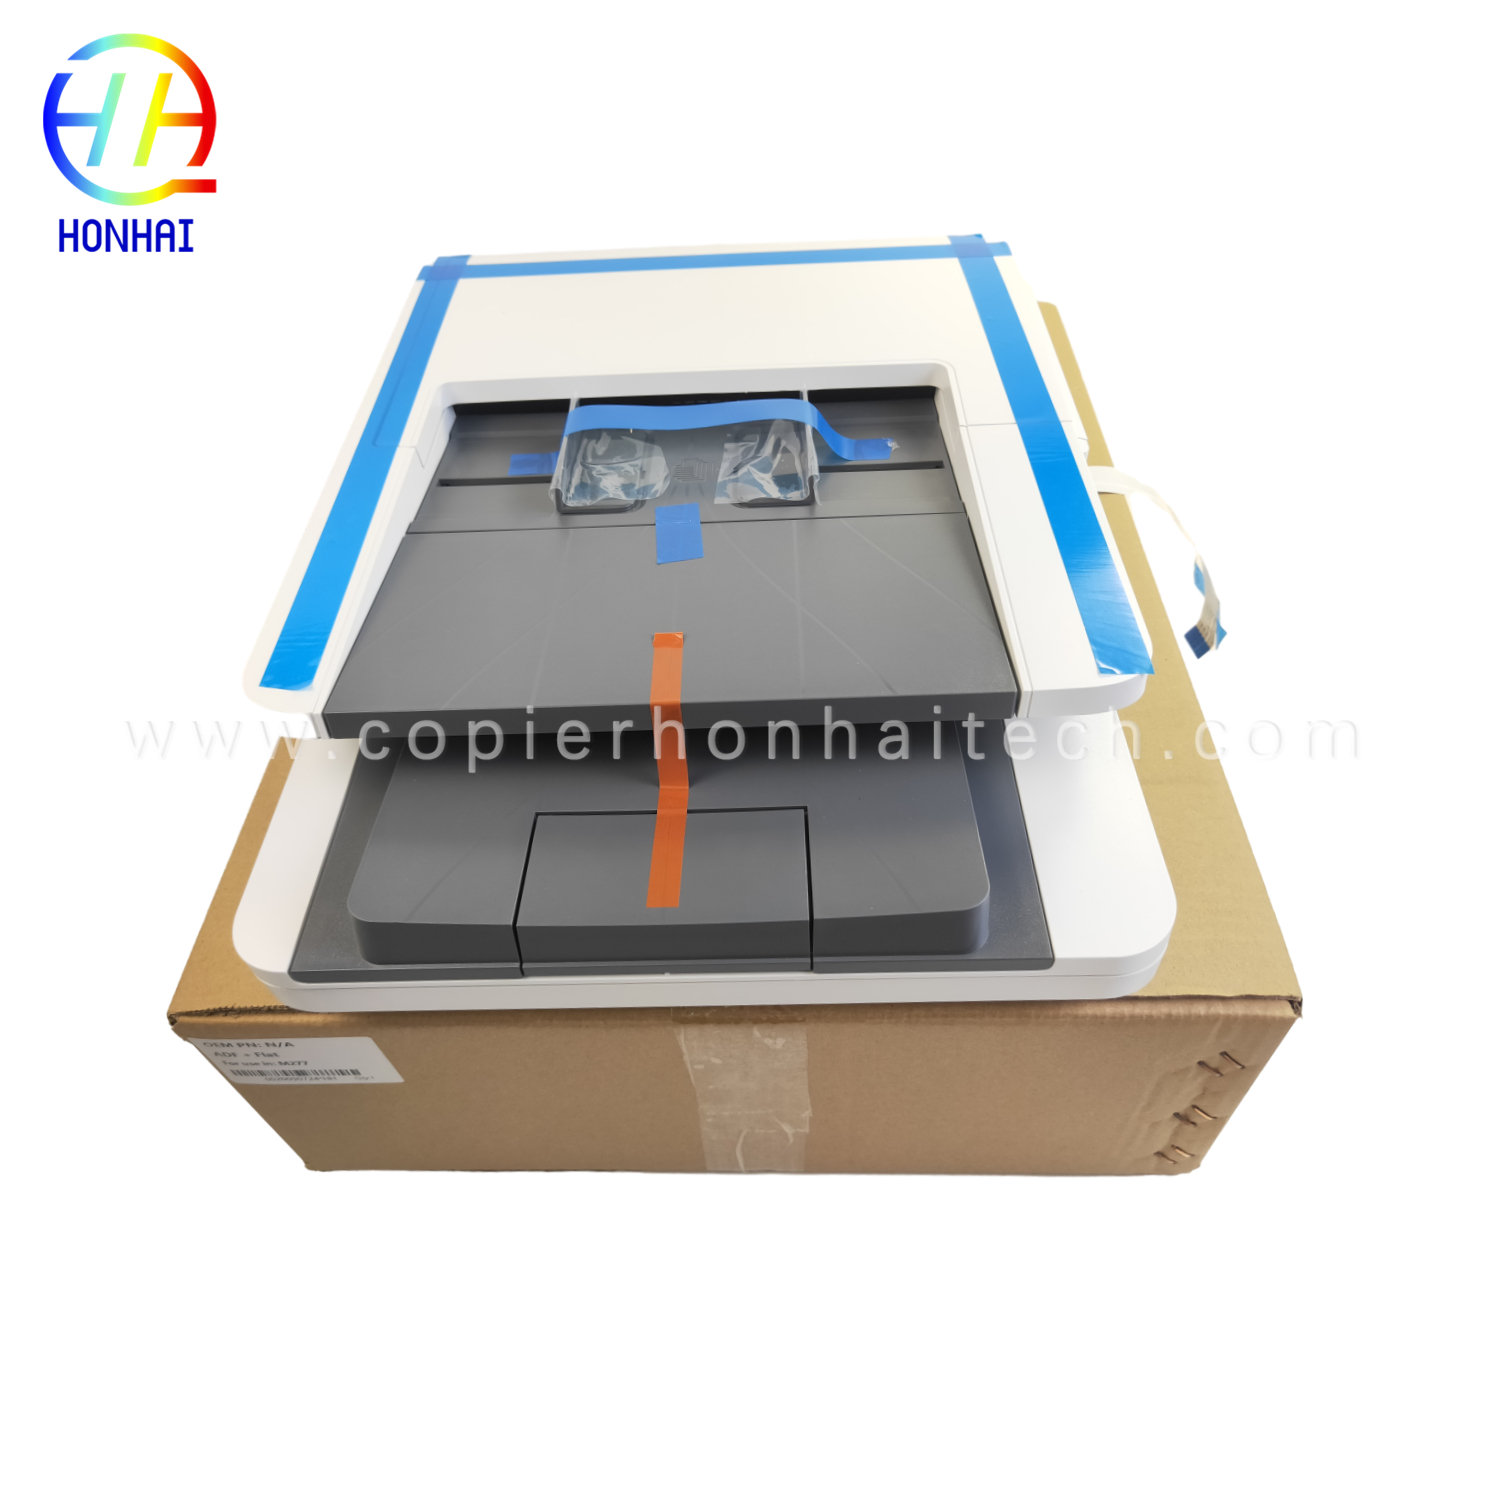 https://www.copierhonhaitech.com/original-printer-adfflat-for-hp-color-laserjet-m277-product/